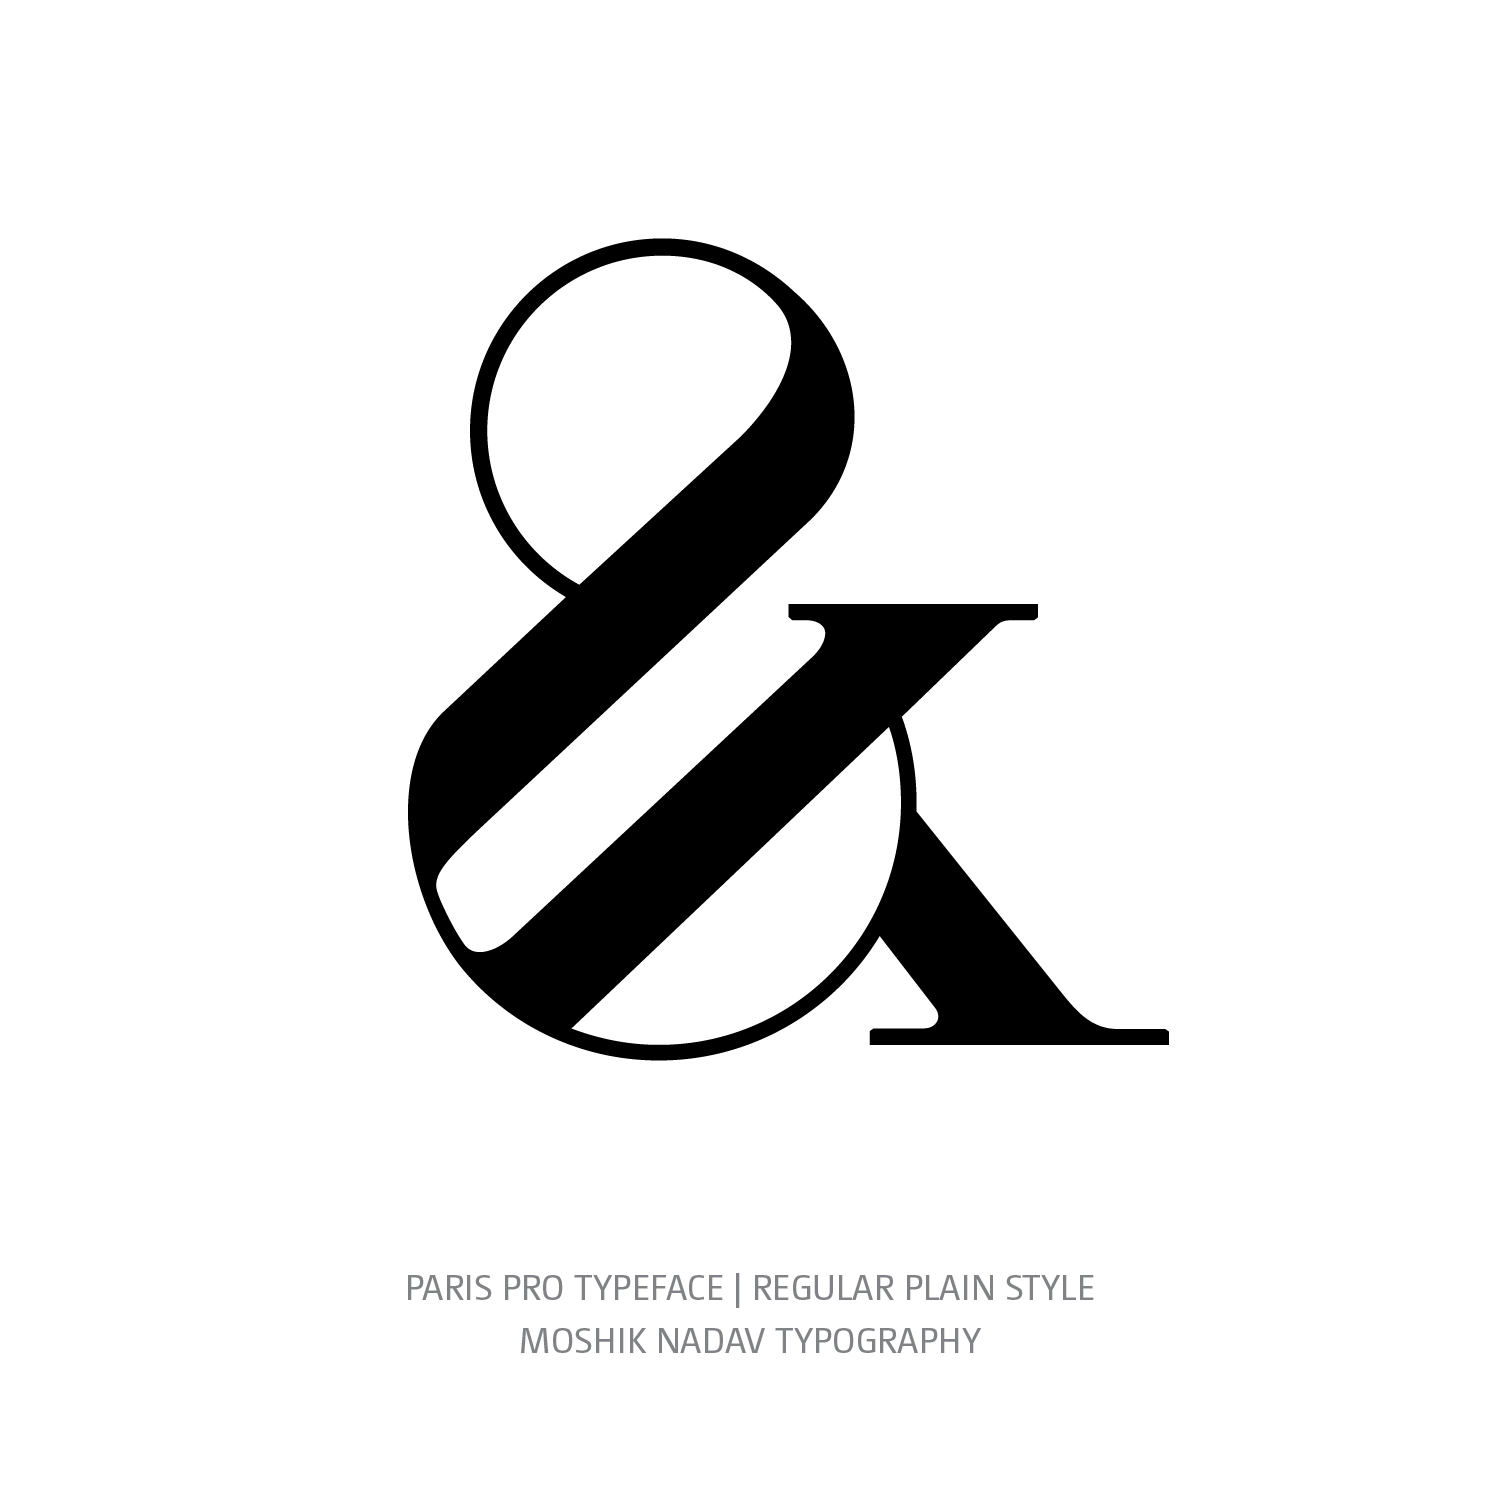 Paris Pro Typeface Regular Plain ampersand